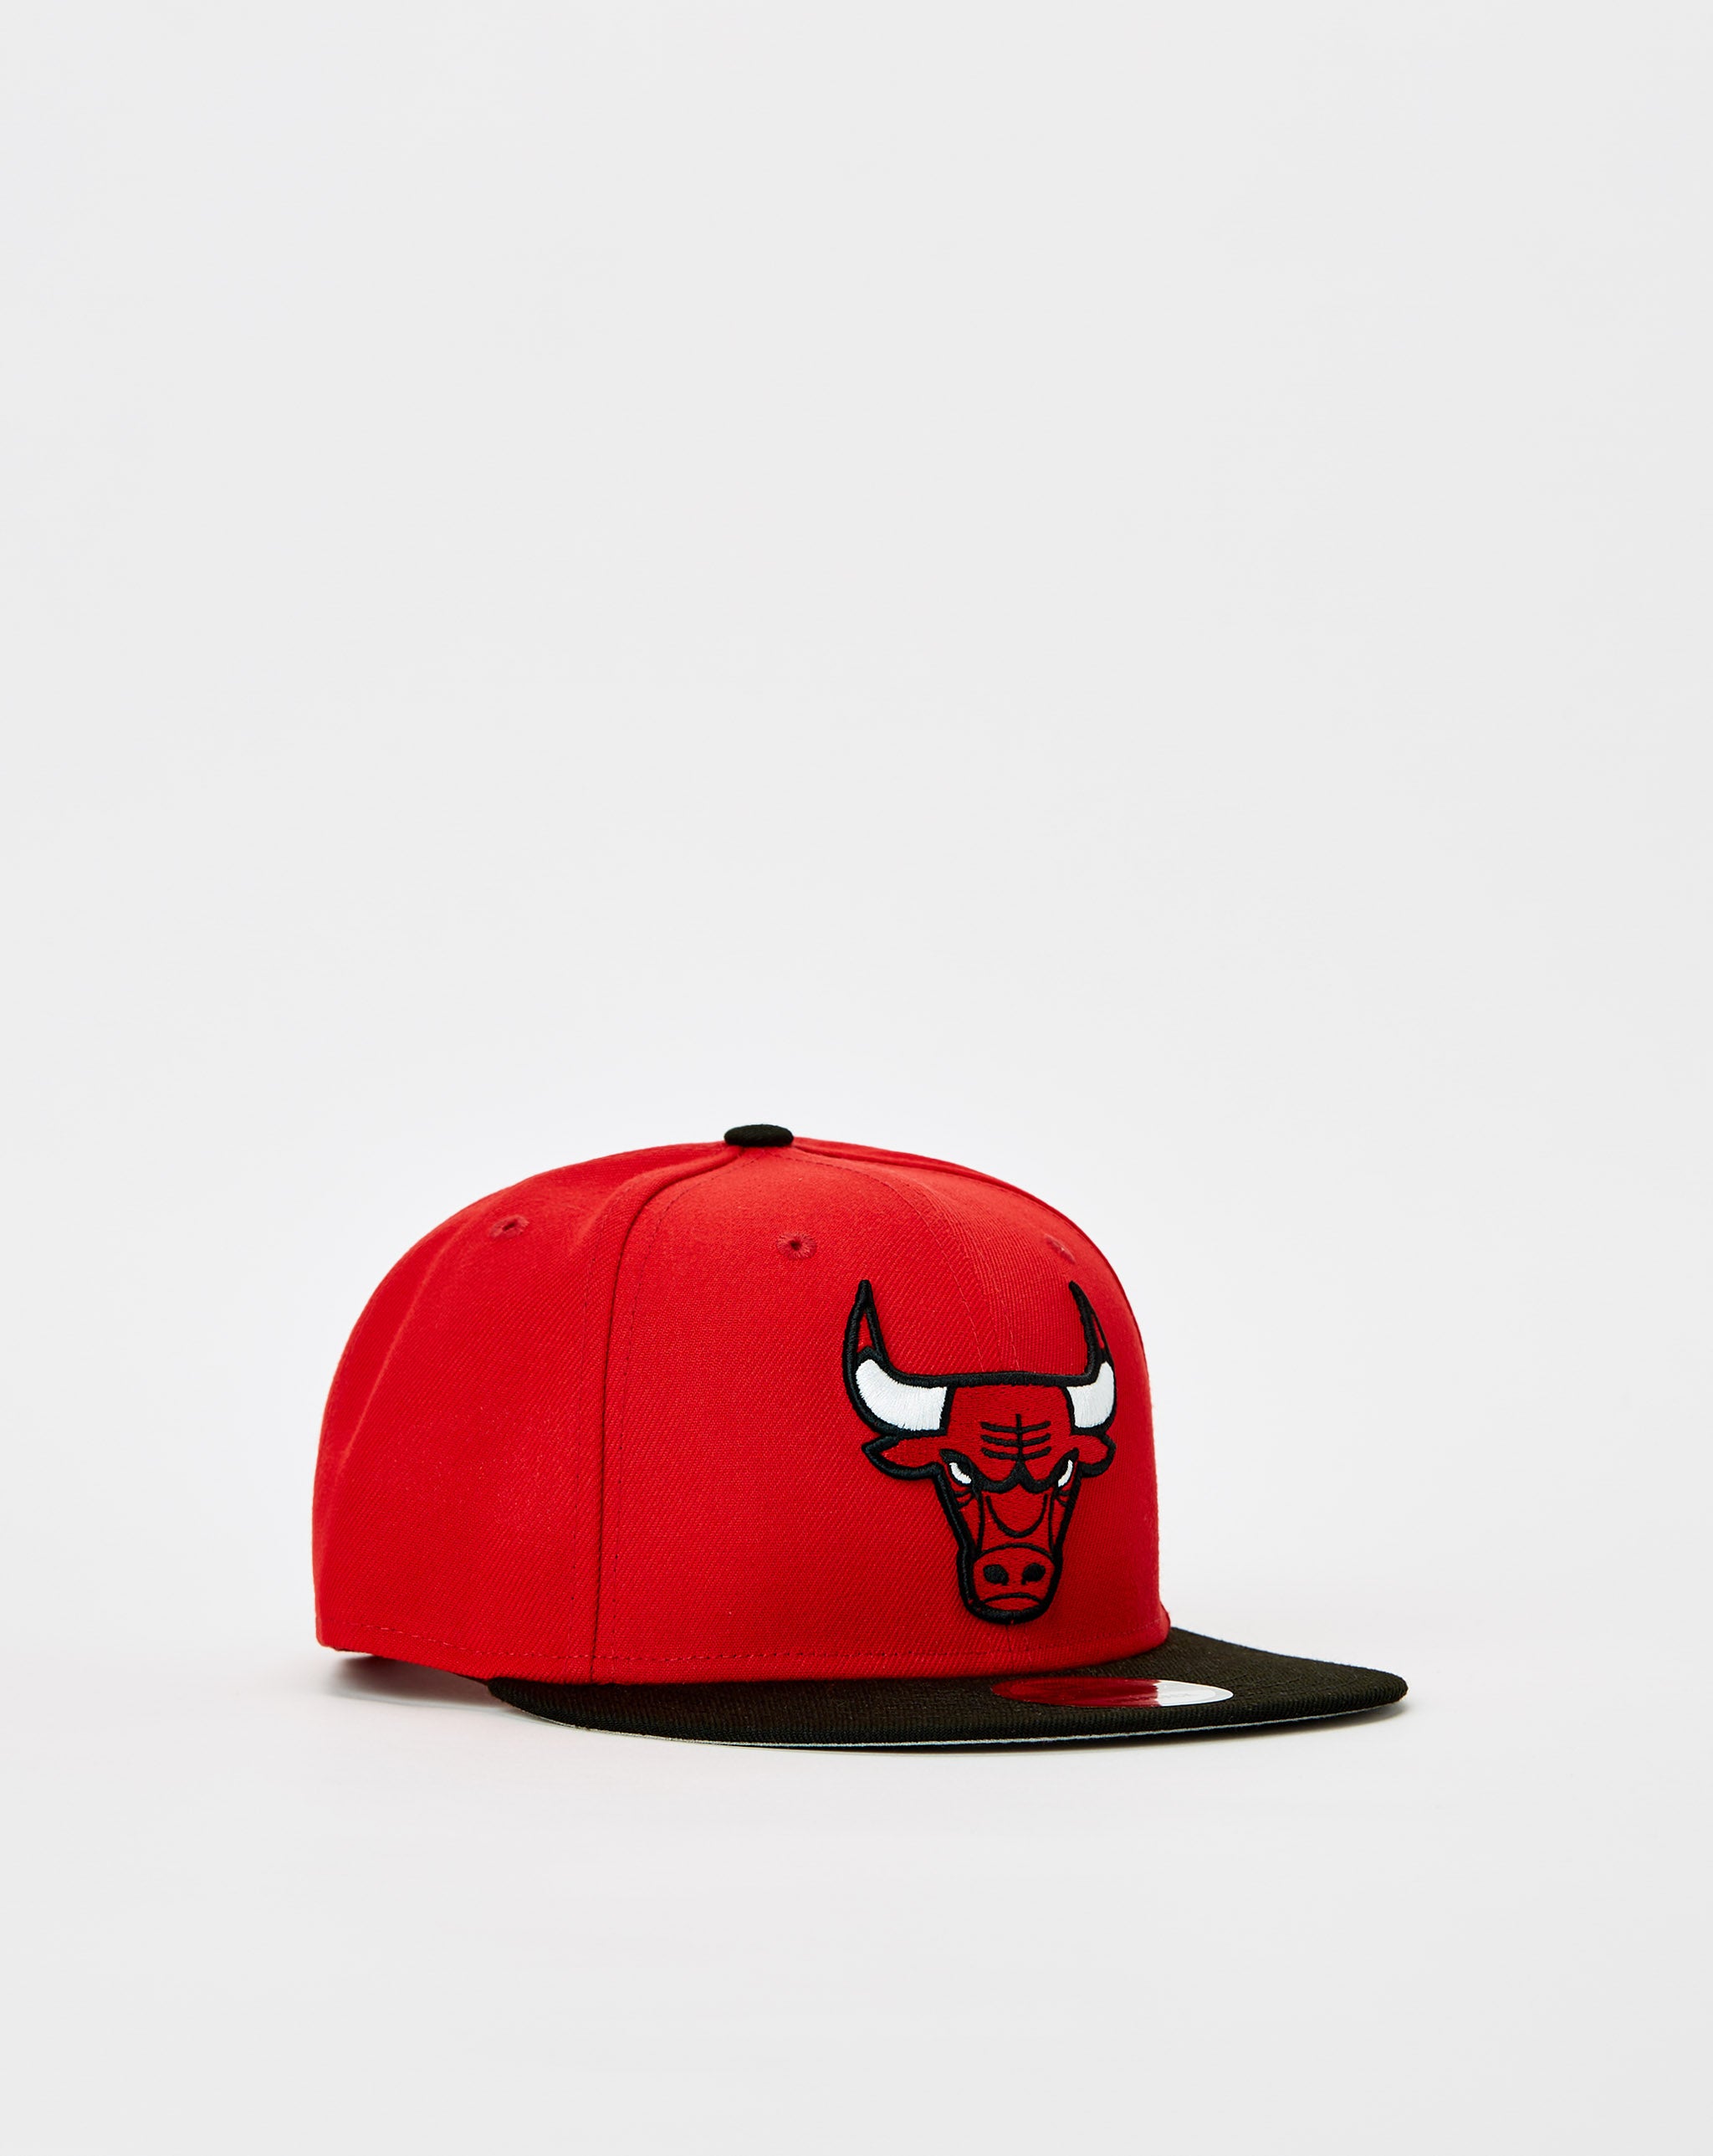 Chicago Bulls Hats, Bulls Snapbacks, Fitted Hats, Beanies